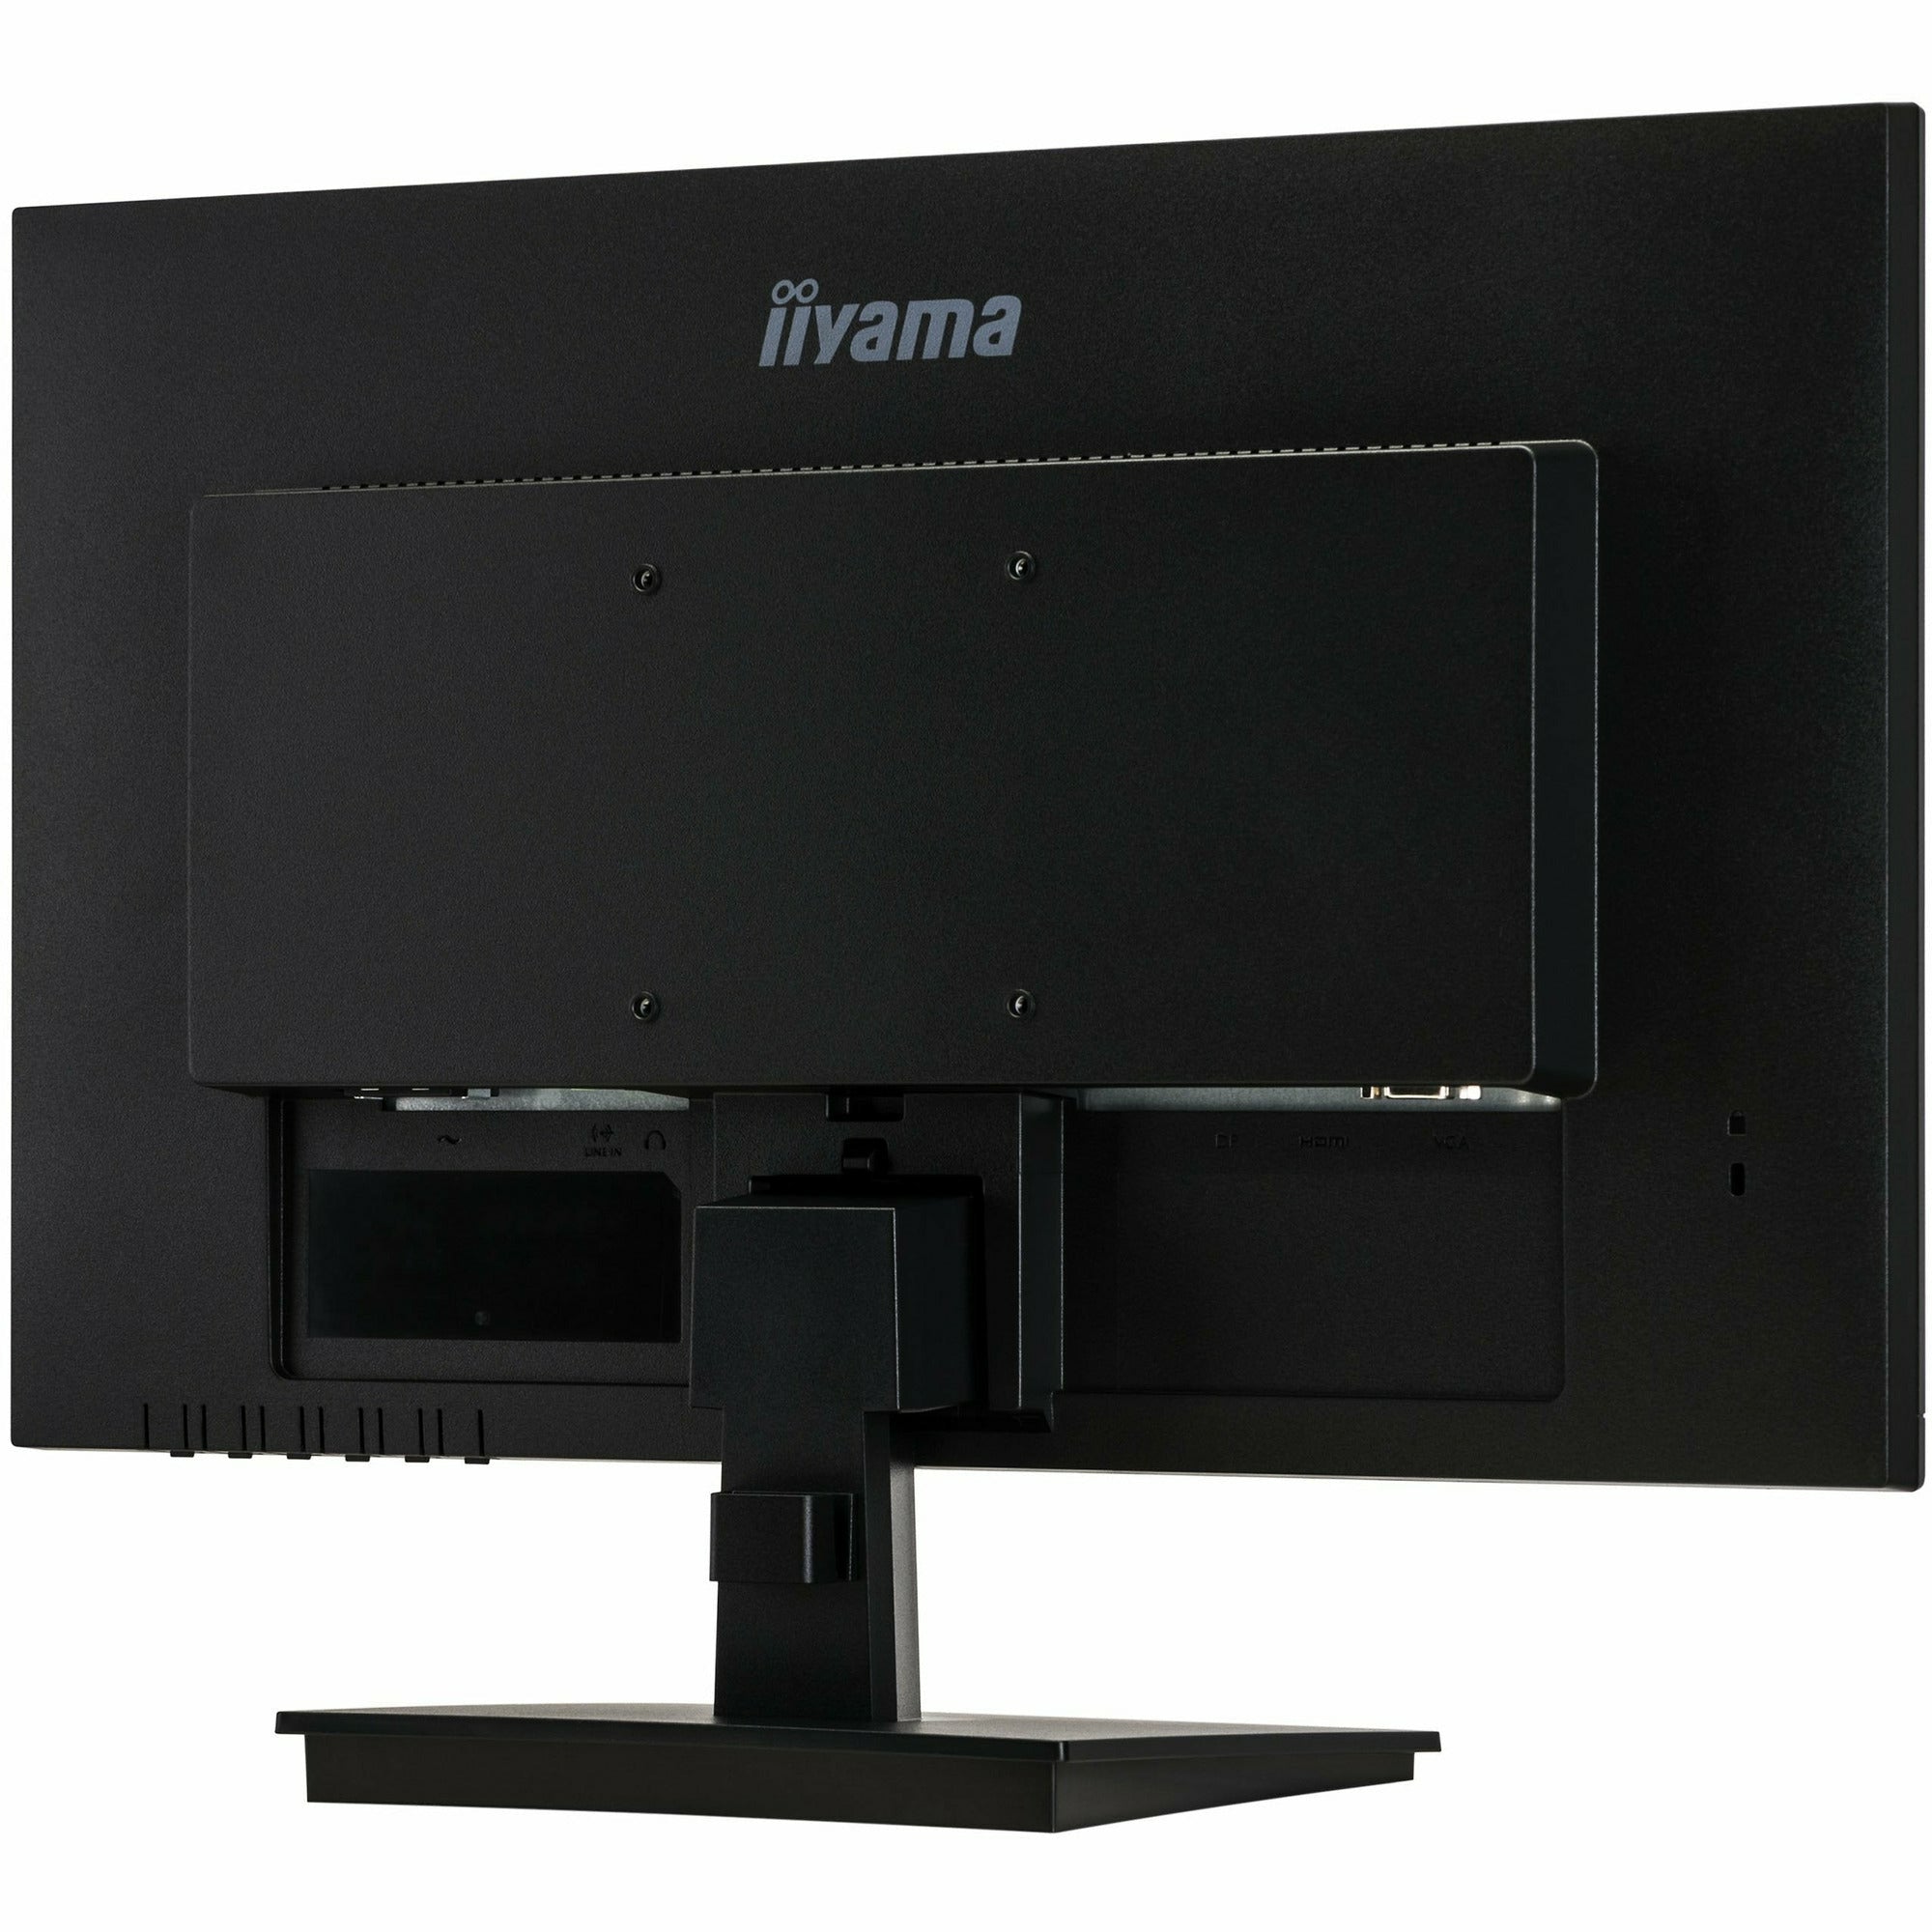 iiyama G-Master G2230HS-B1 21.5" Black Hawk Gaming Monitor